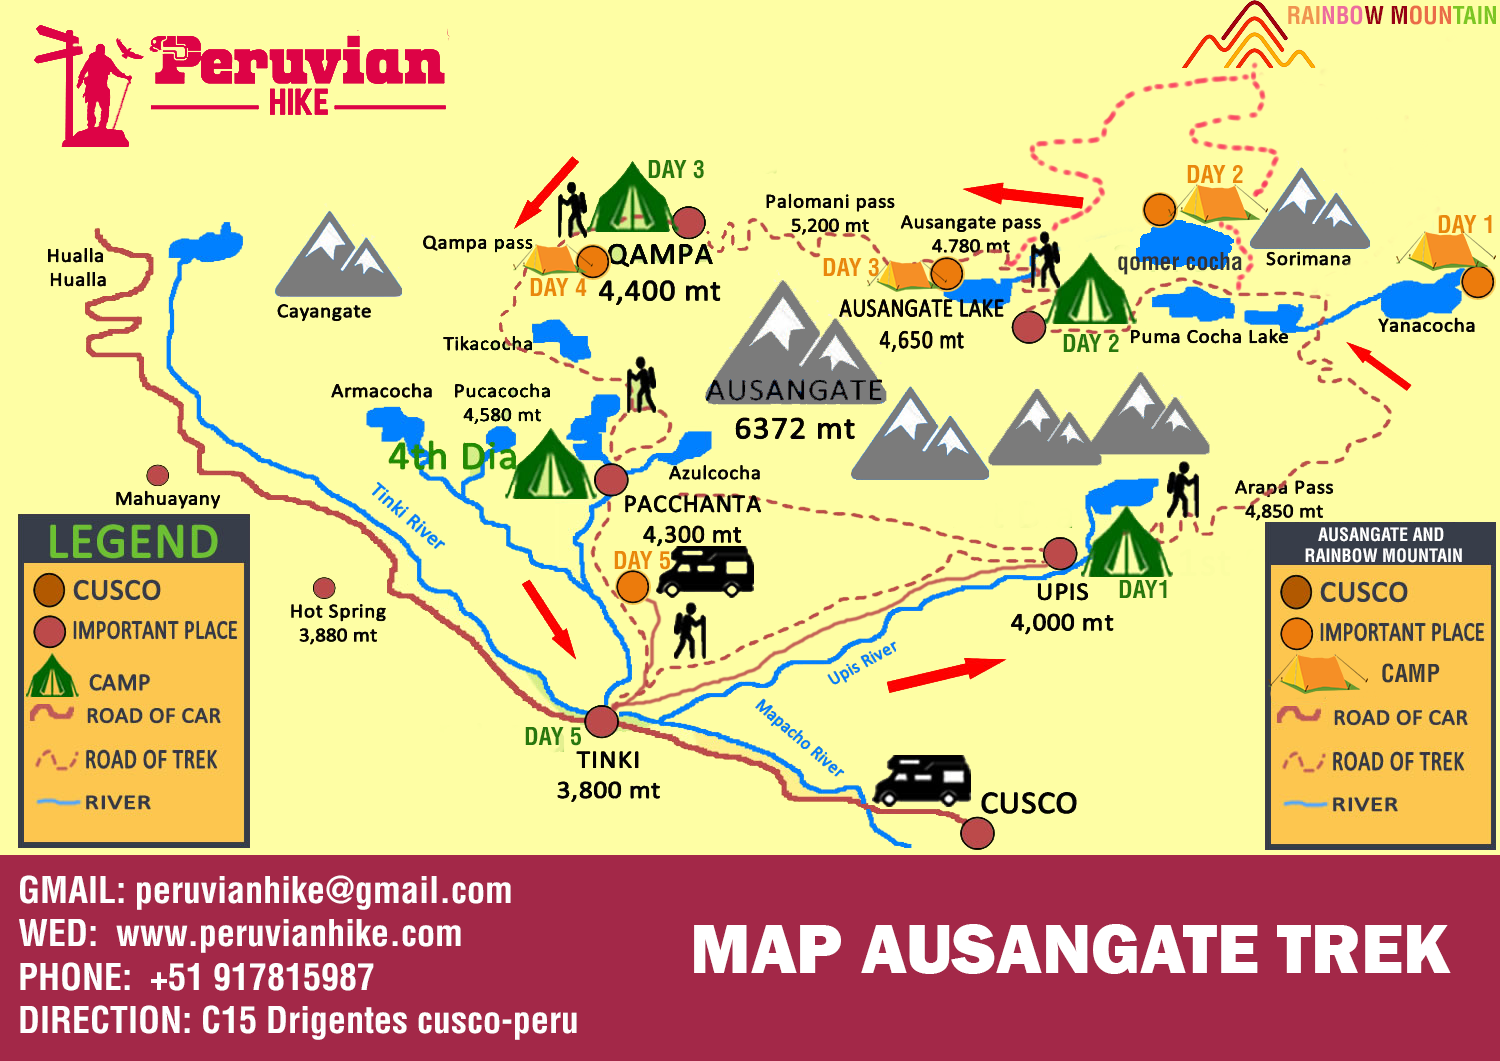 Ausangate trek 4 days map and itinerary